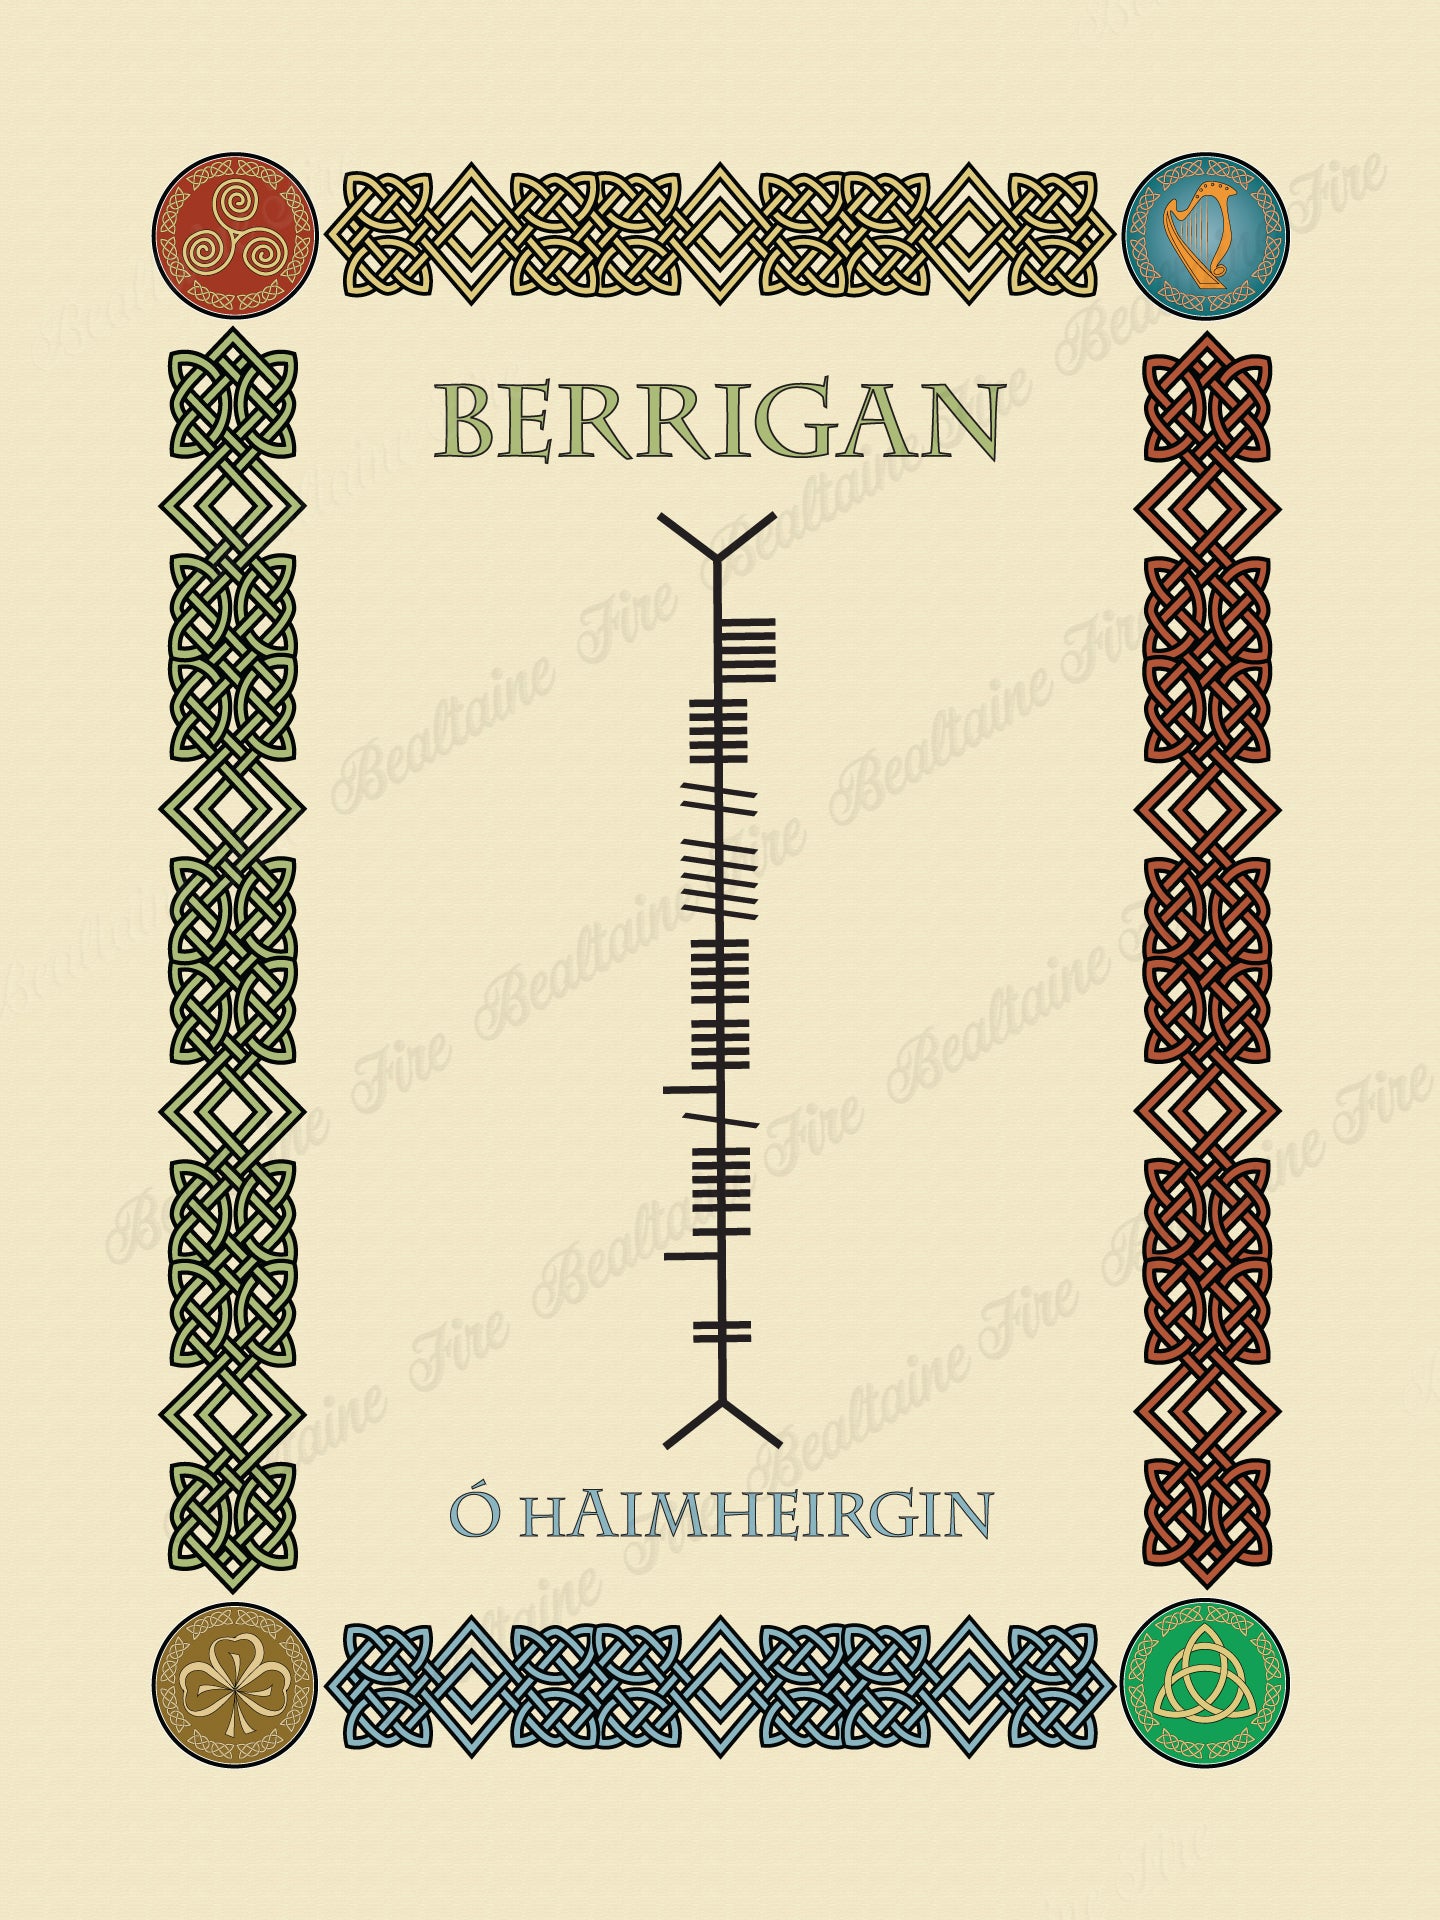 Berrigan in Old Irish and Ogham - Premium luster unframed print